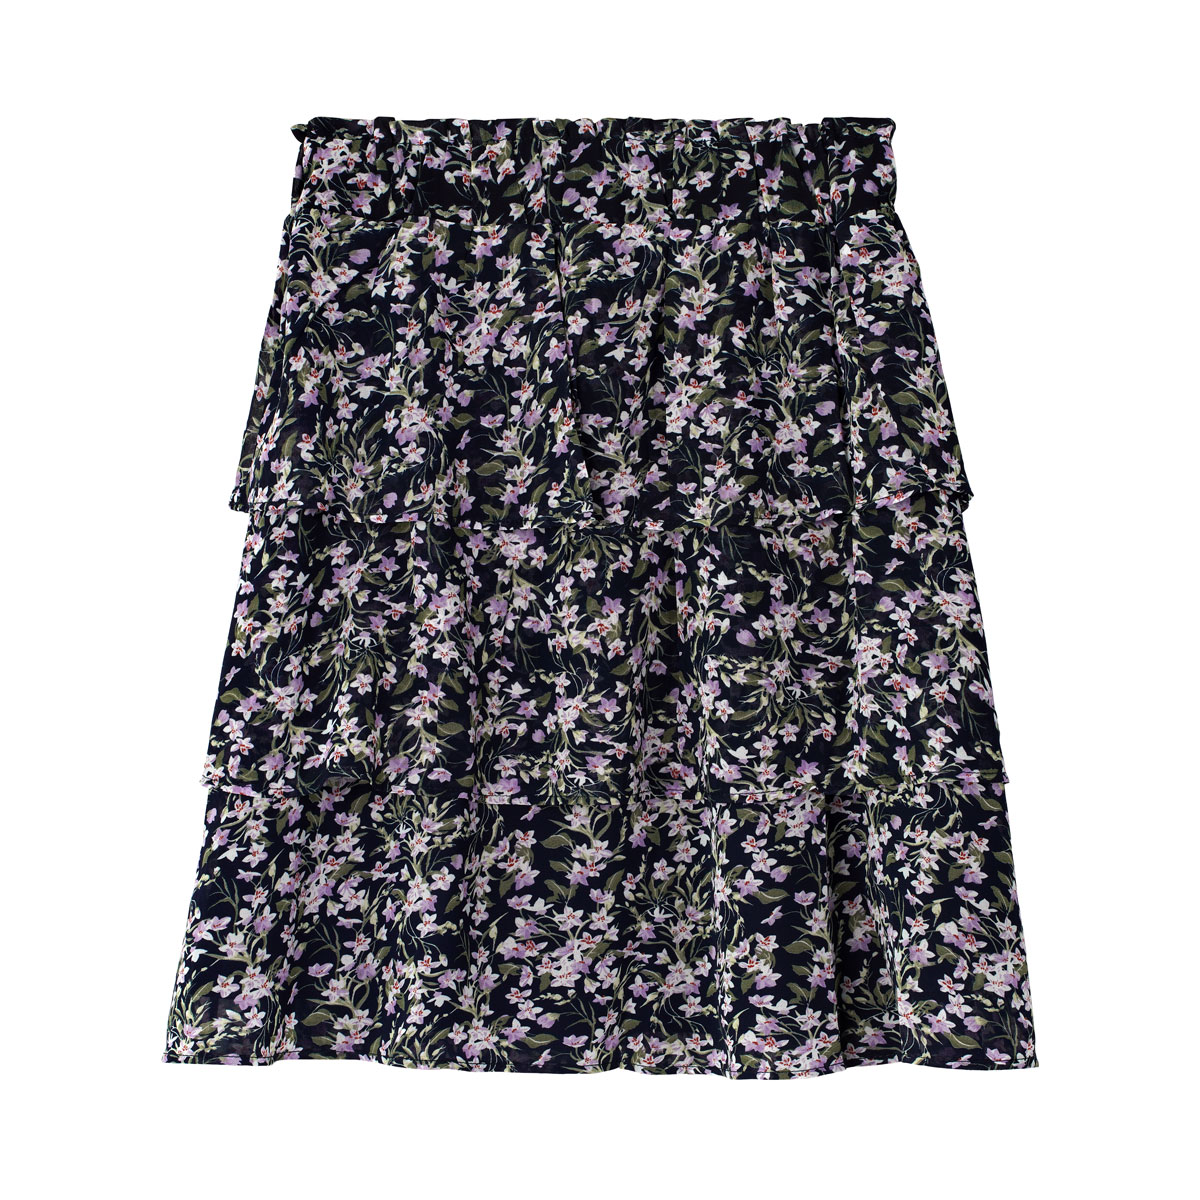 Black flowy skirt flower pattern